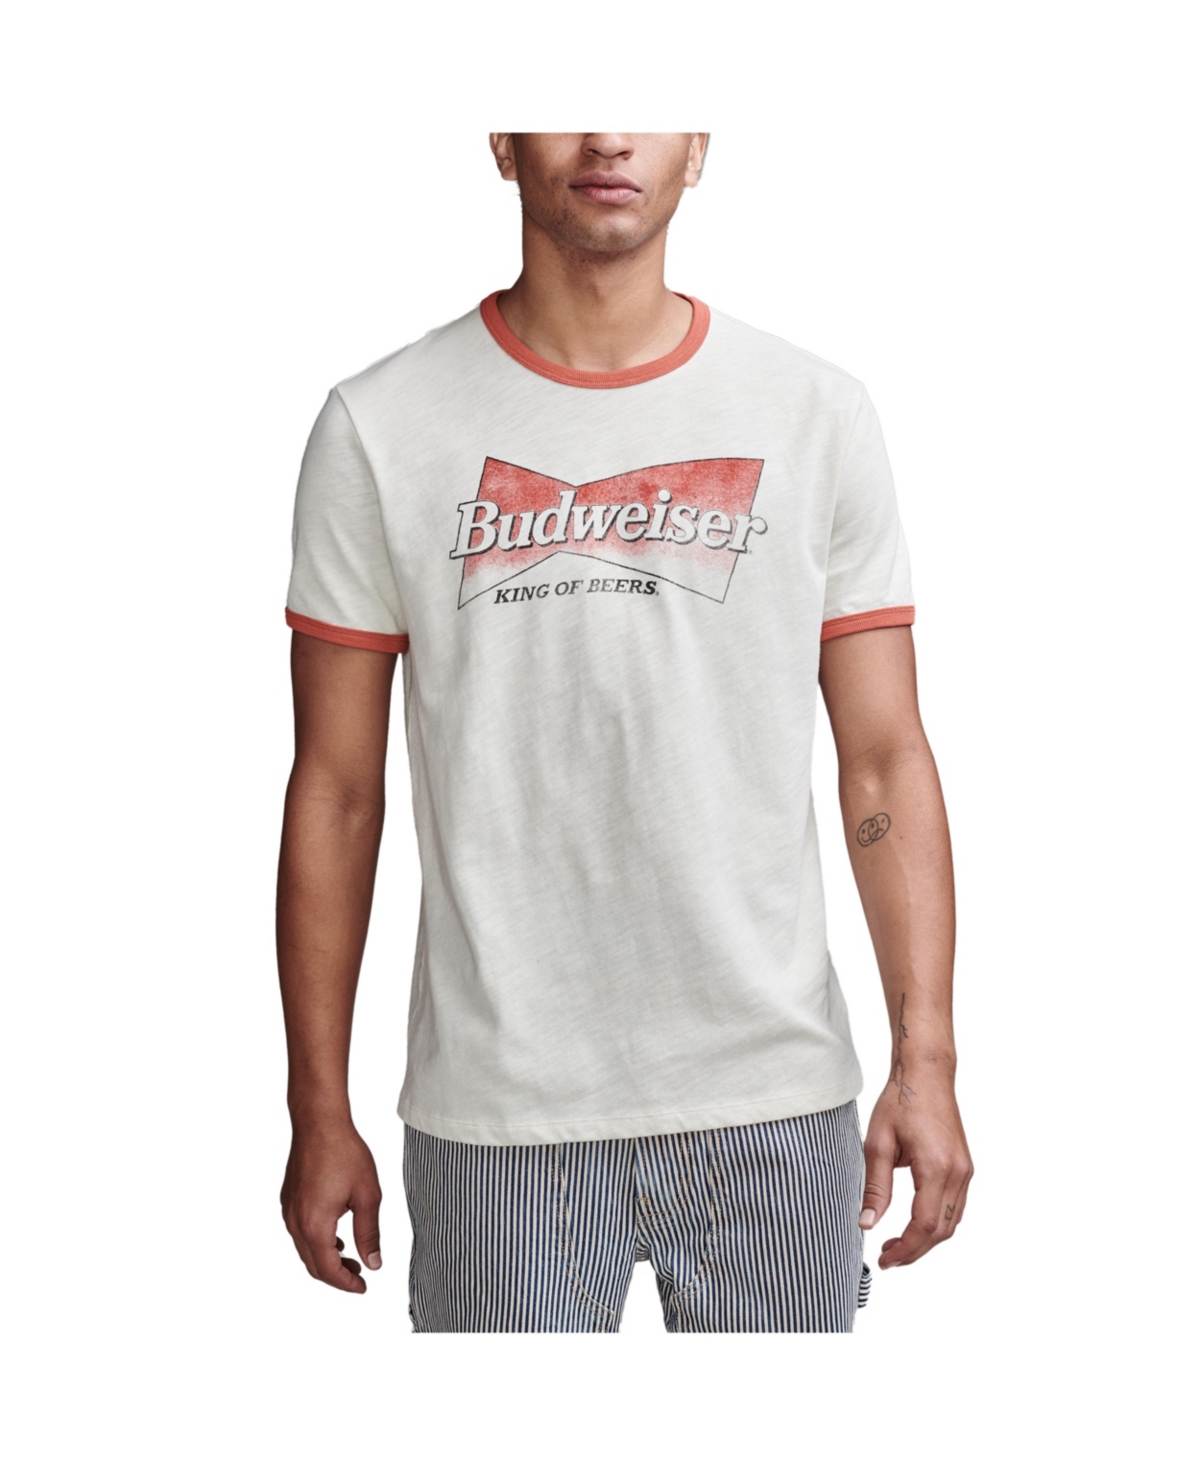 Men's Short Sleeve Budweiser Bowtie T-shirt - Lilly White